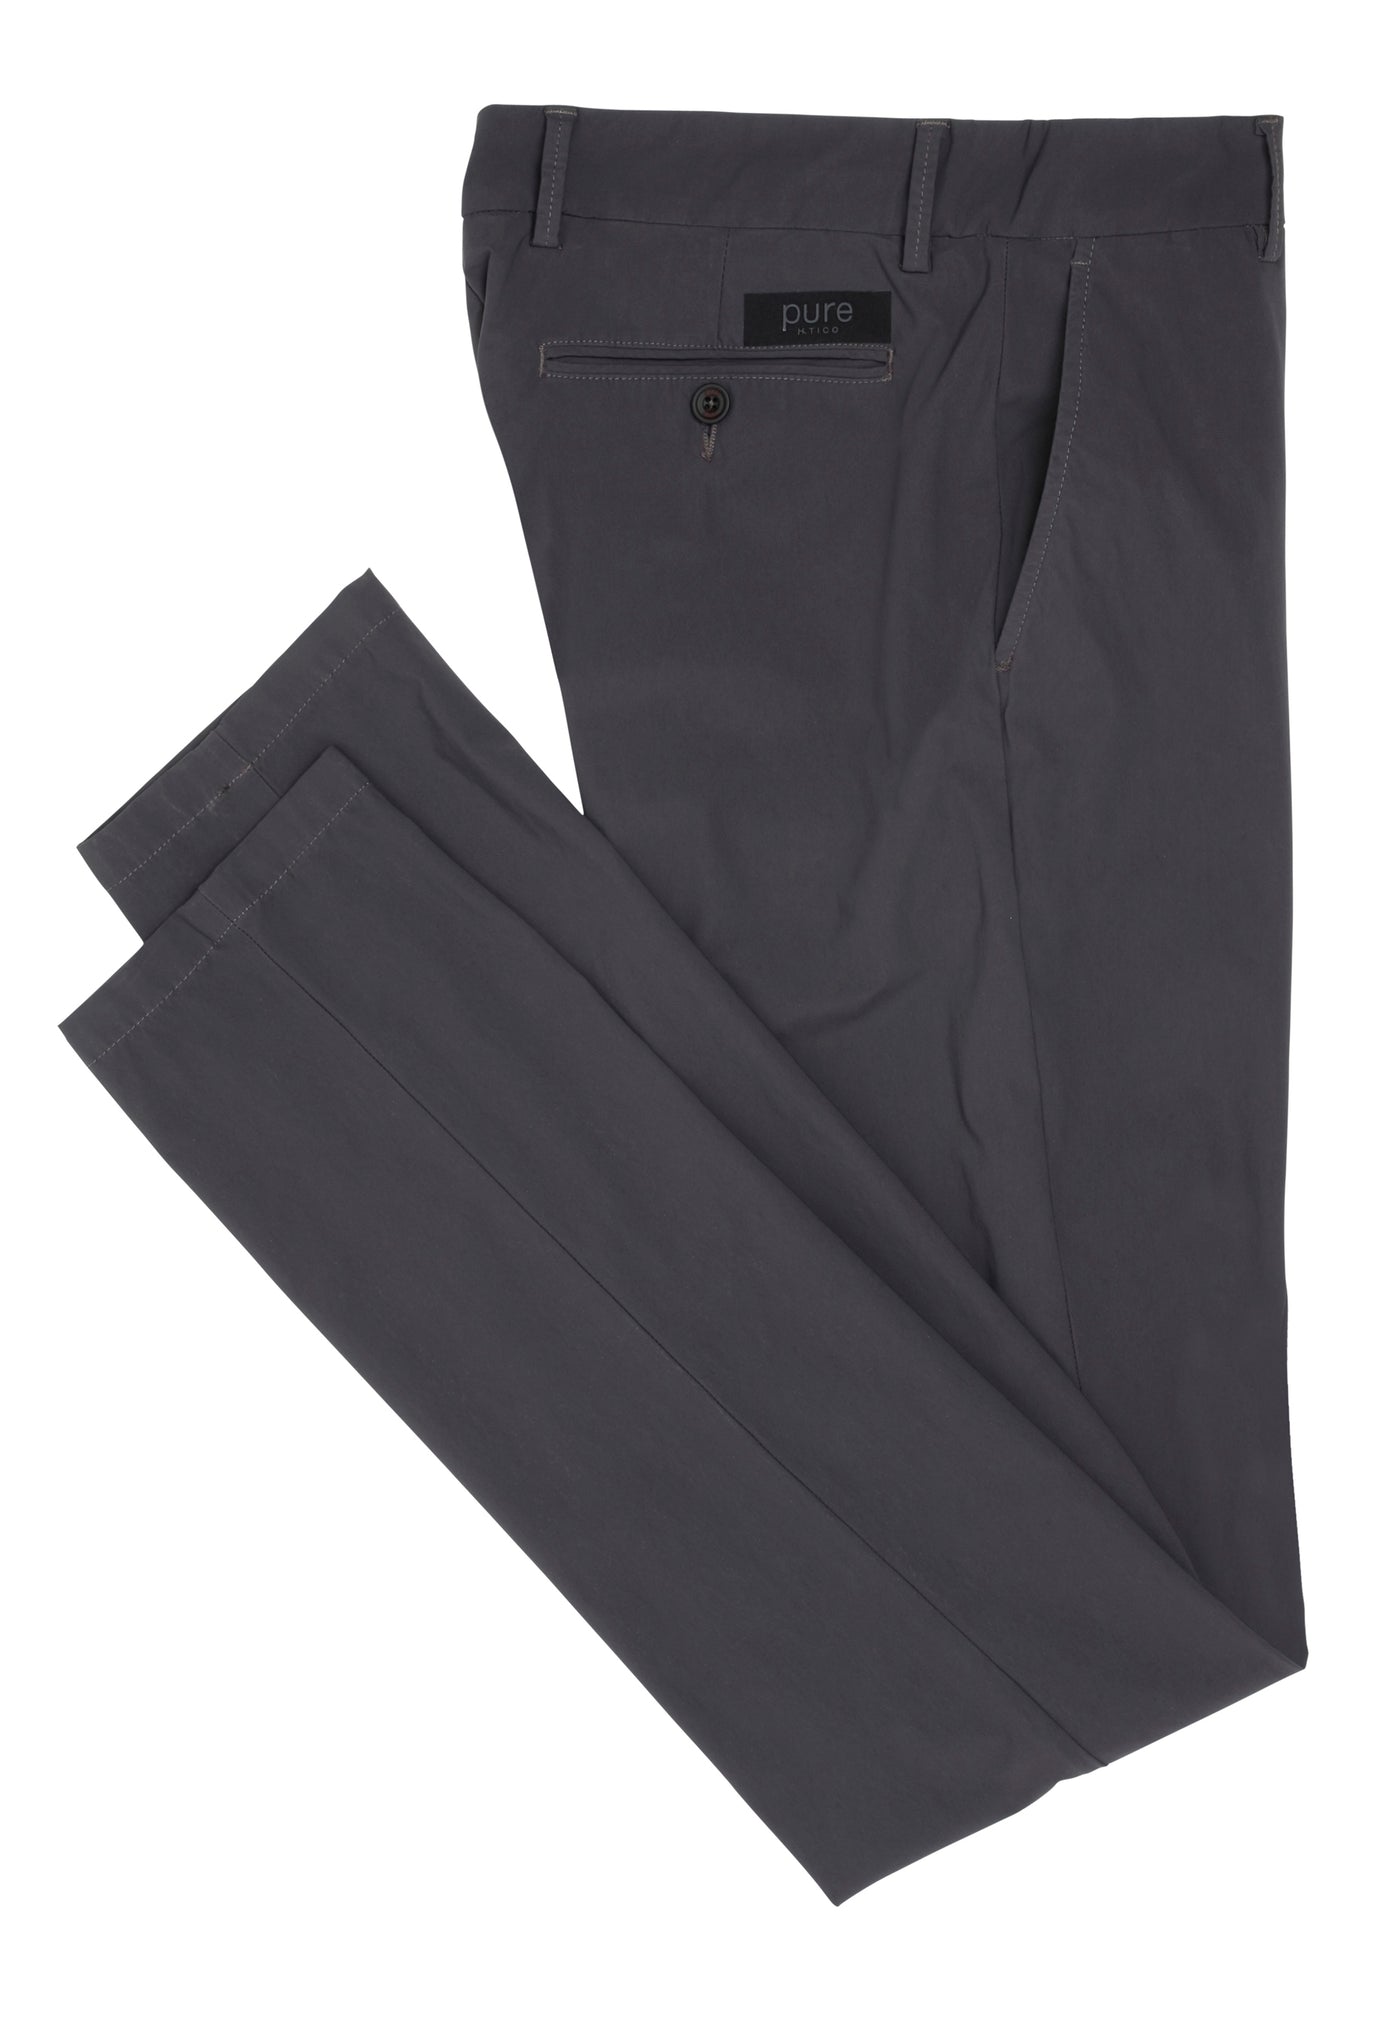 D31410-99200 - Functional pants - gray